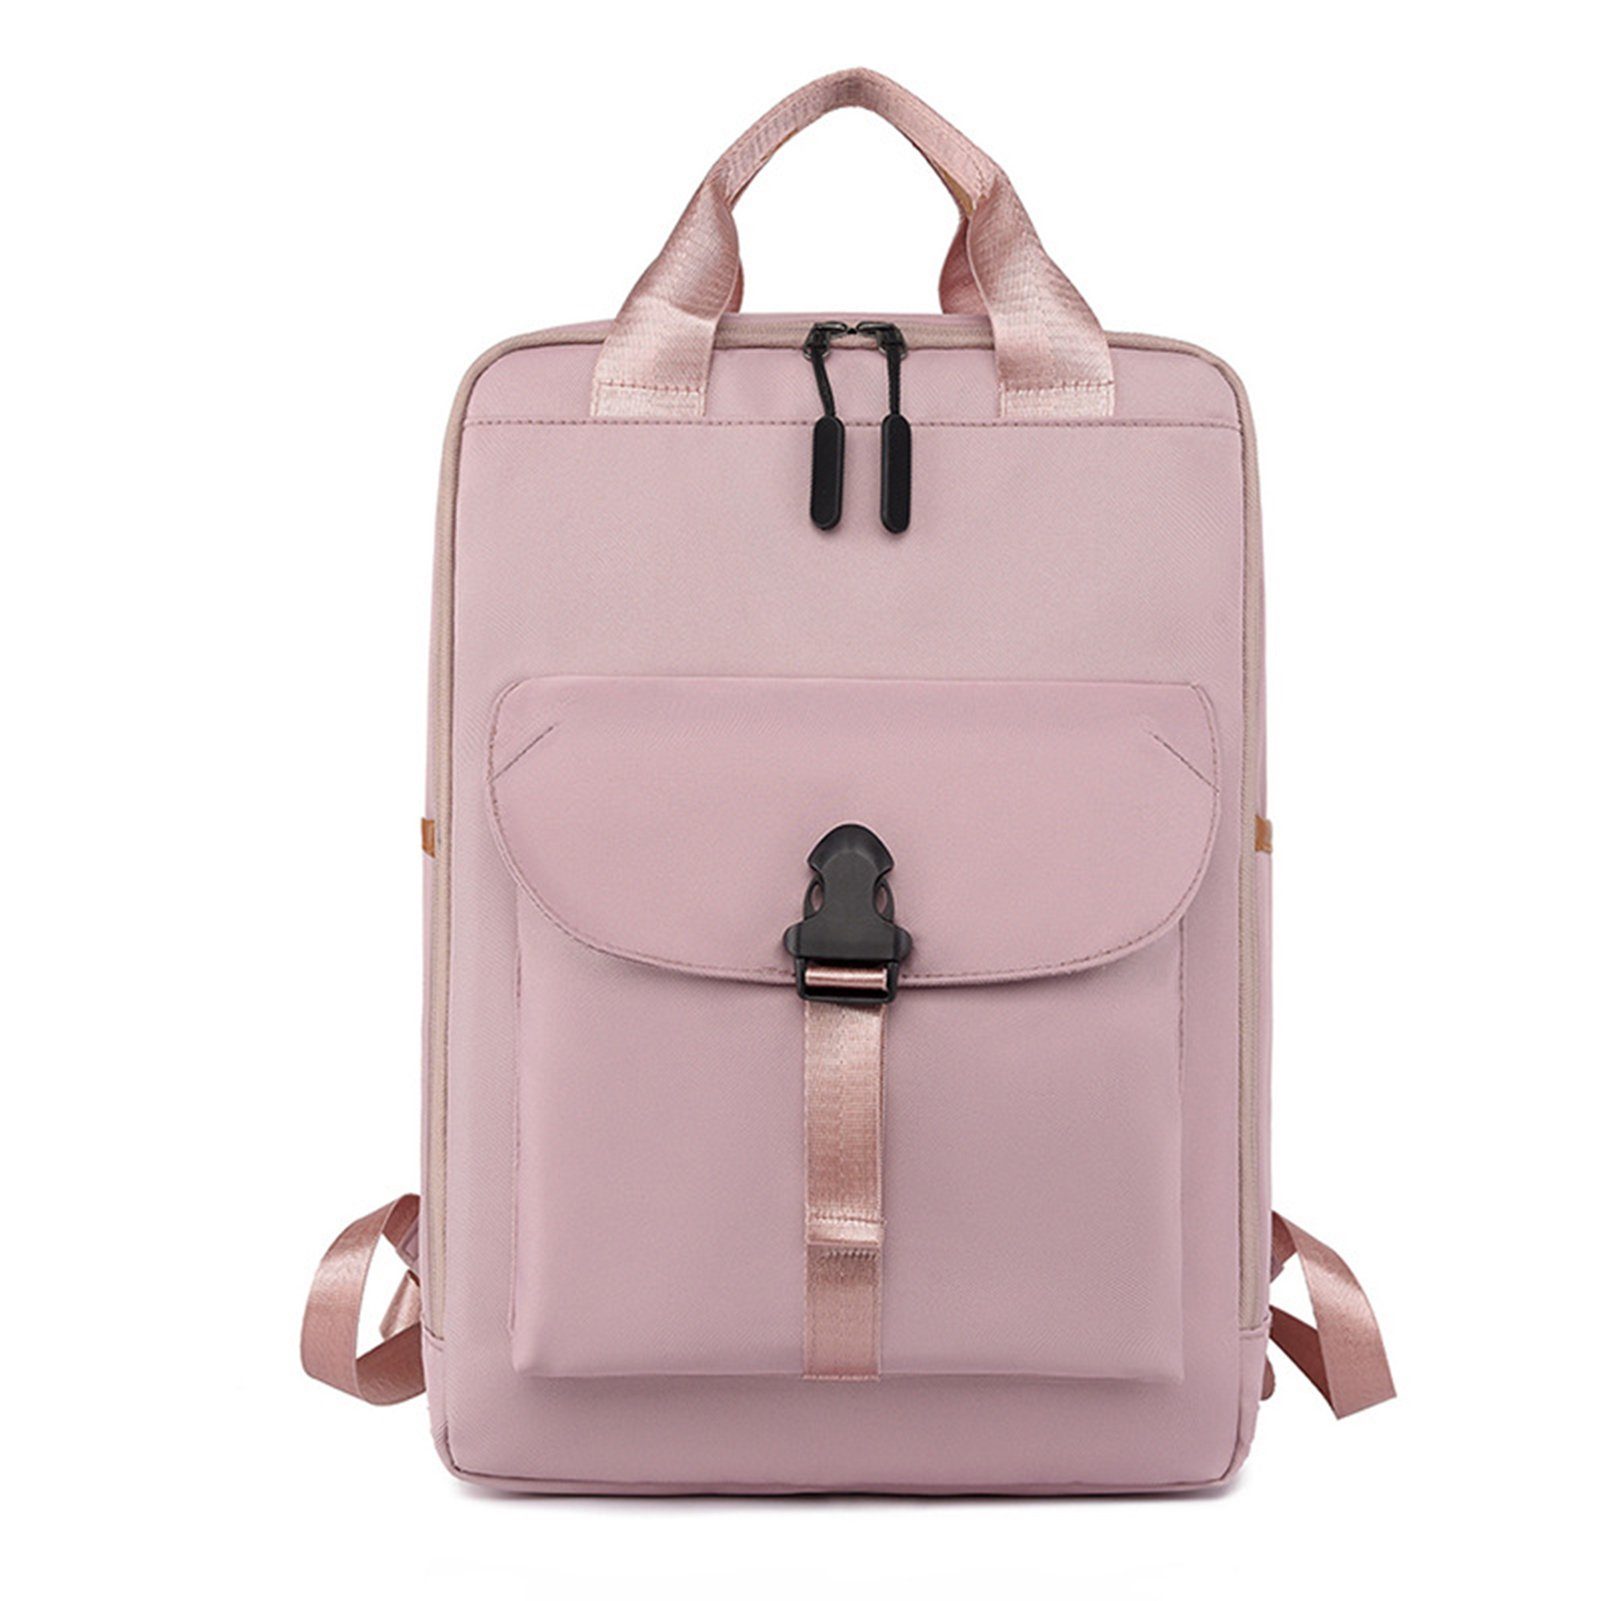 Blusmart Rucksack Mode-Reiserucksack, Großes Rucksack, Damen Backpack, Freizeitrucksack pink